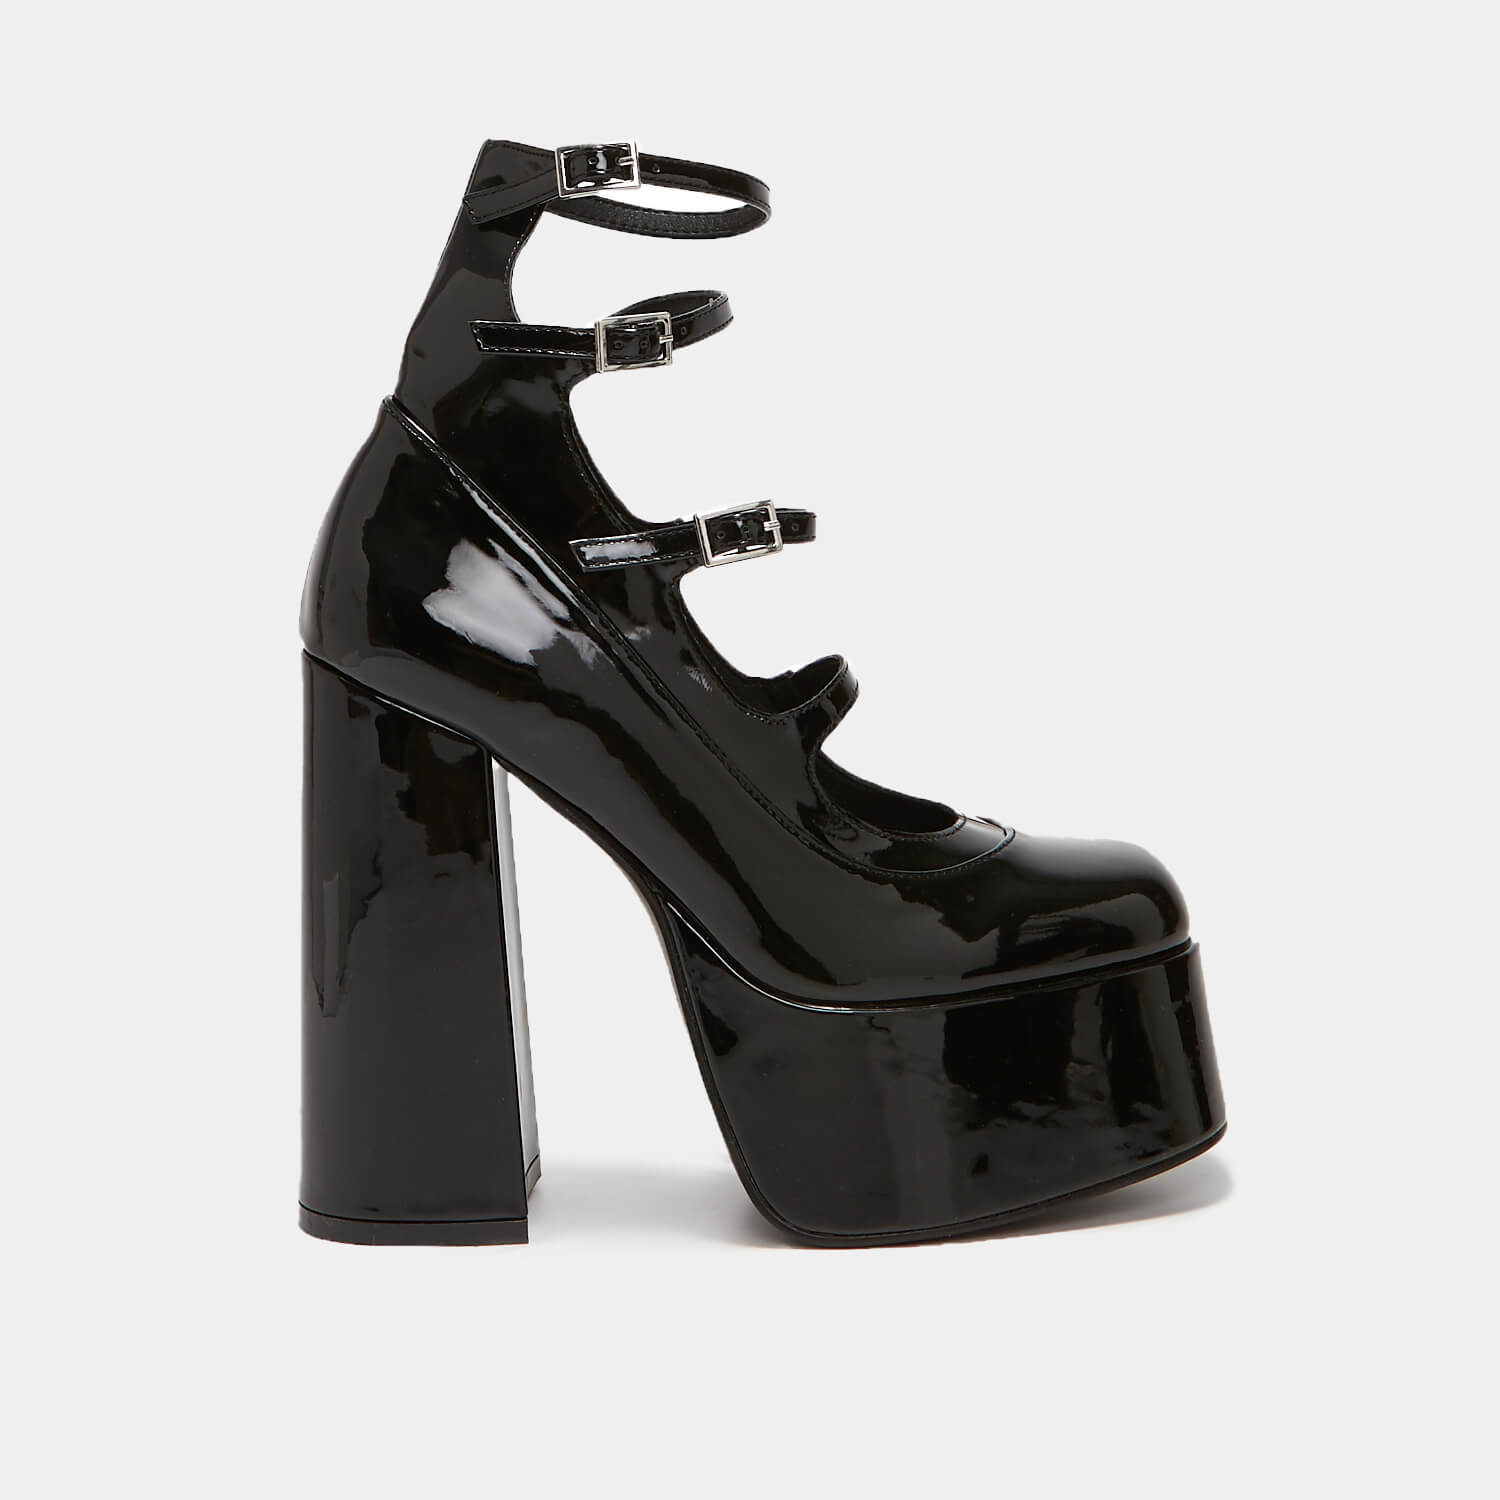 Gurren Strappy Black Patent Platform Heels - Shoes - KOI Footwear - Black - Side View